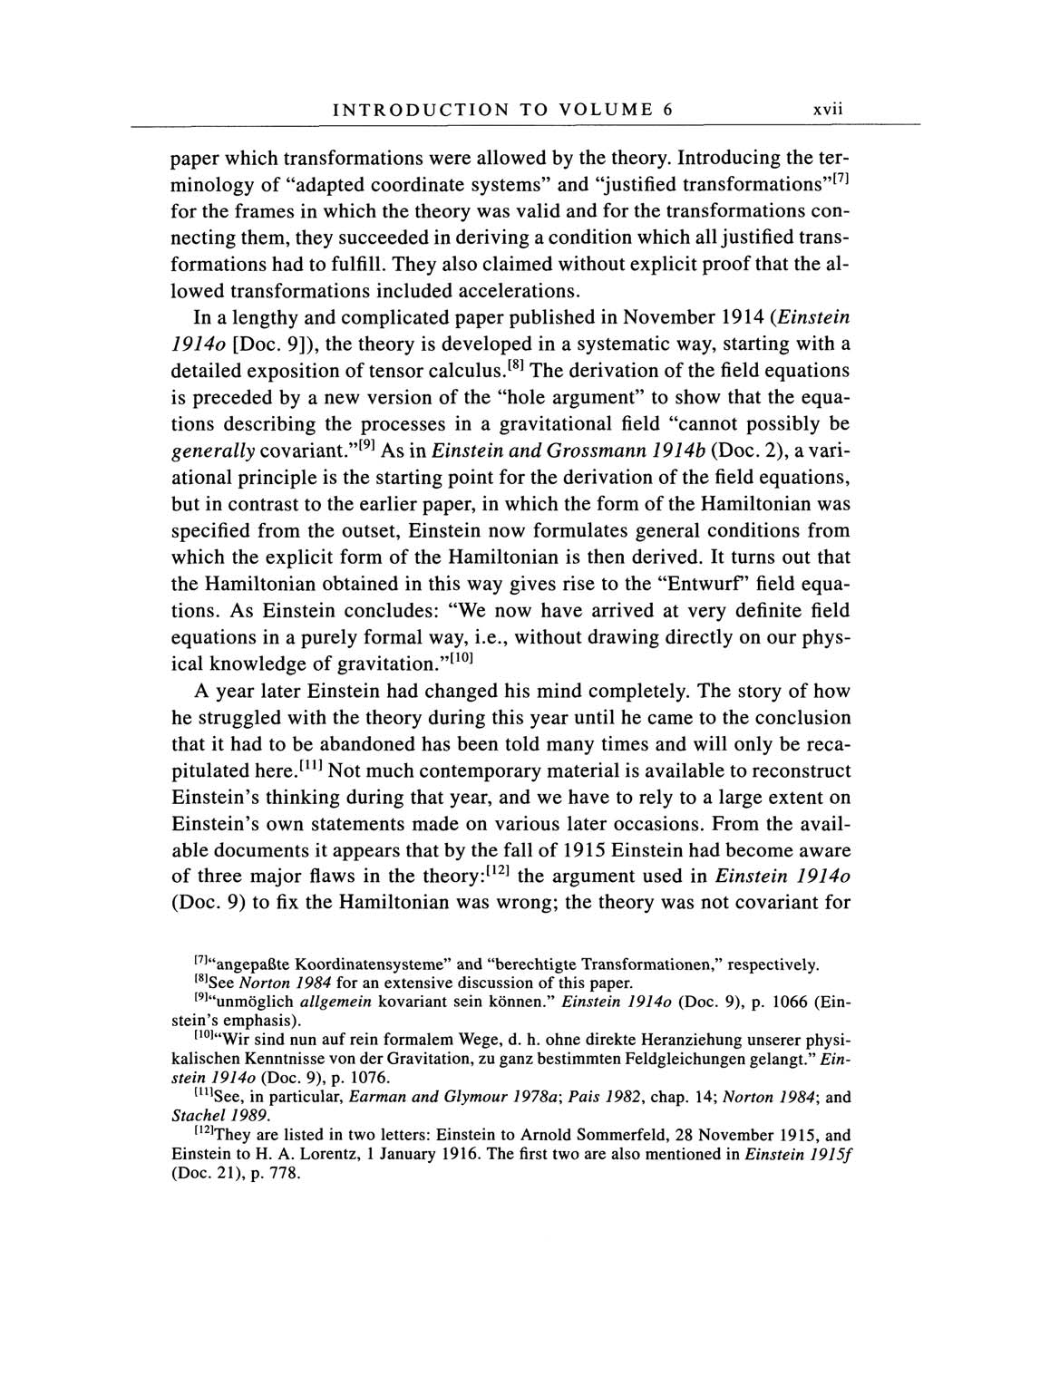 Volume 6: The Berlin Years: Writings, 1914-1917 page xvii